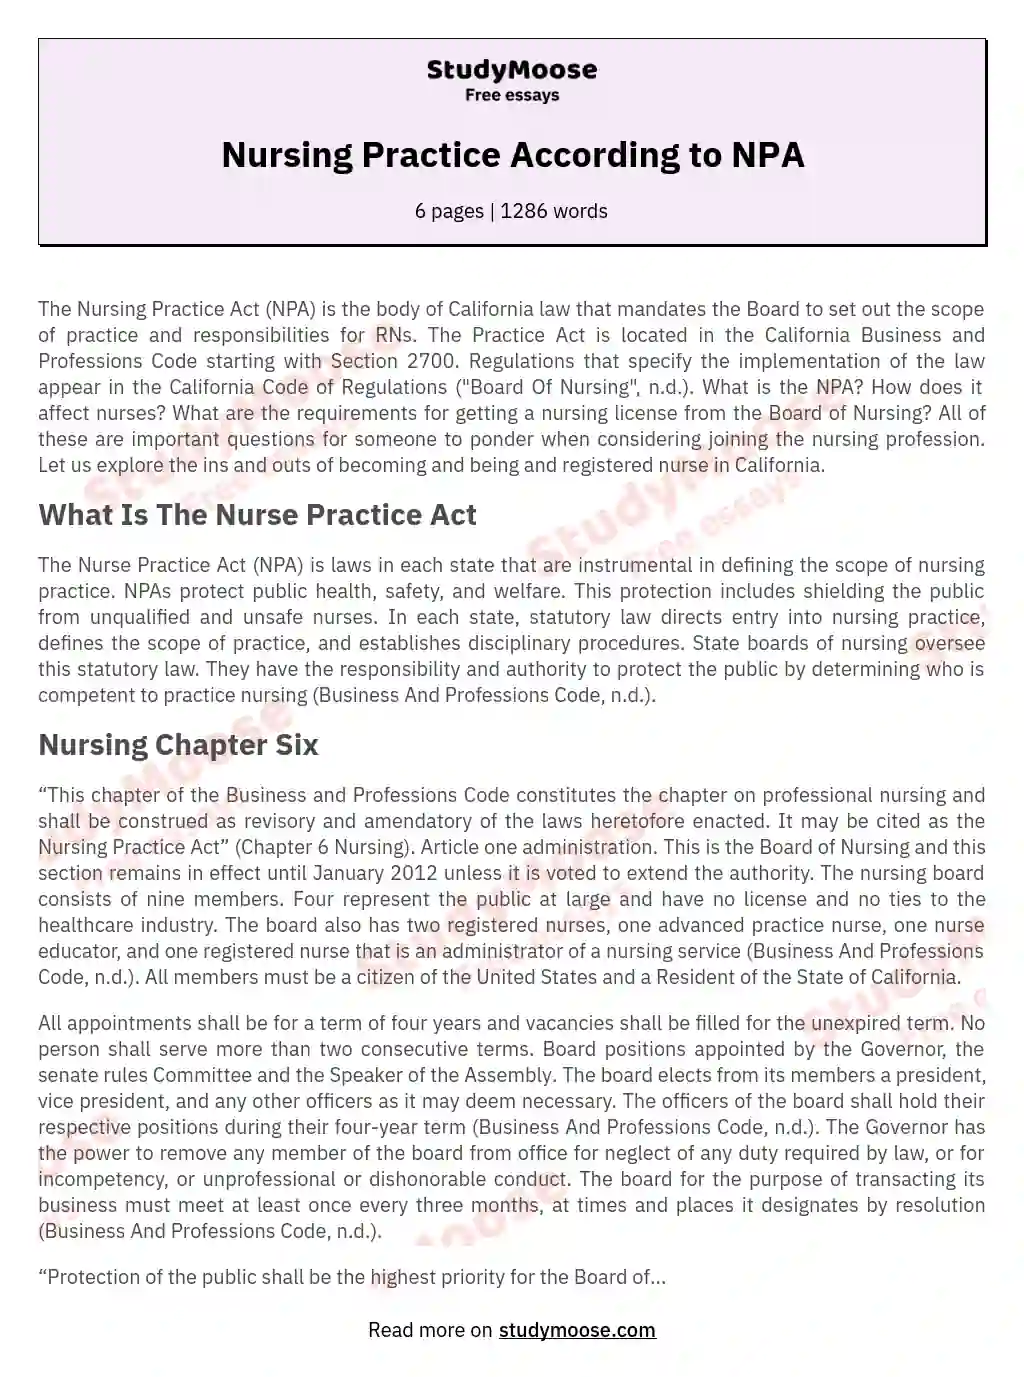 Nursing Practice According to NPA essay